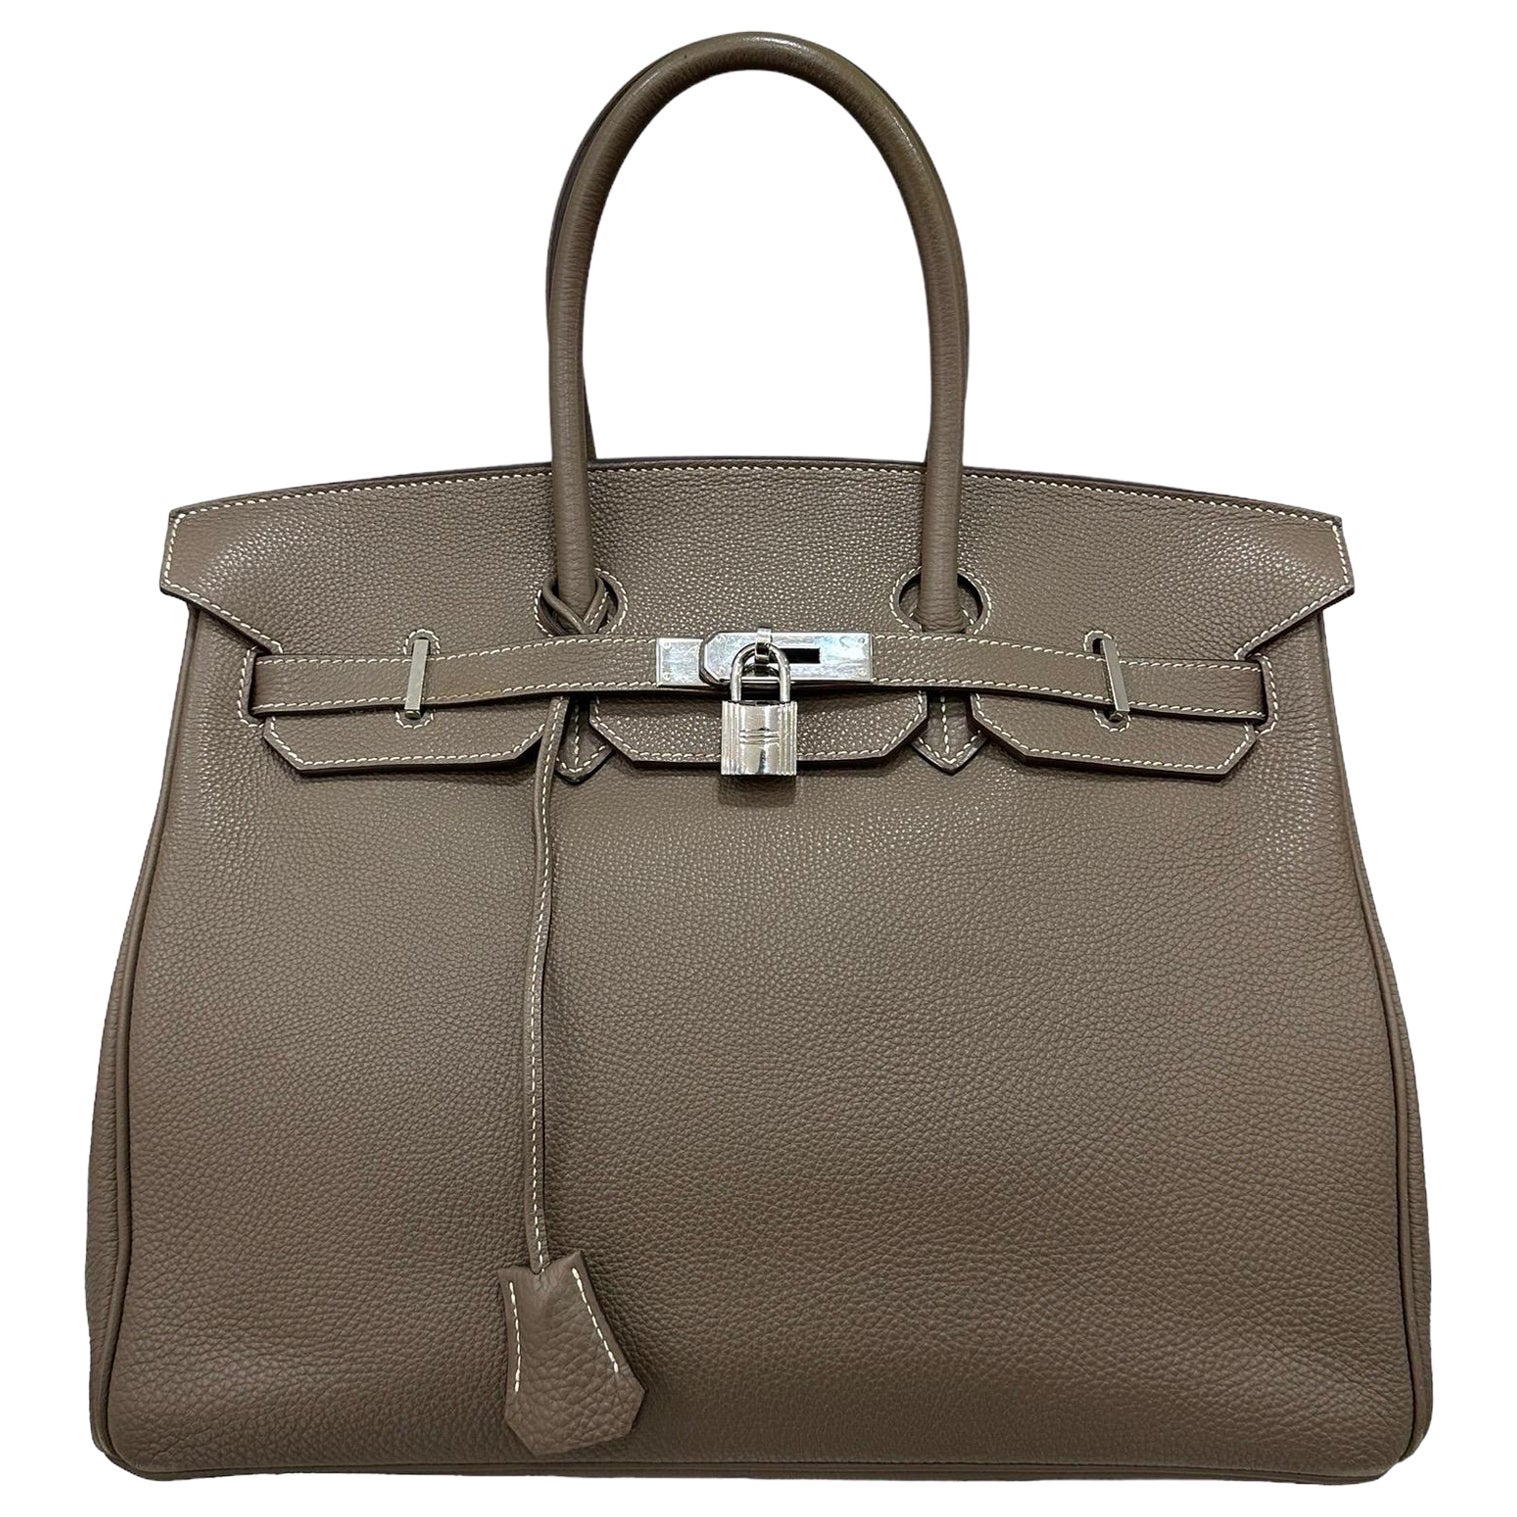 2008 Hermès Birkin 35 Togo Leather Toundra Top Handle Bag